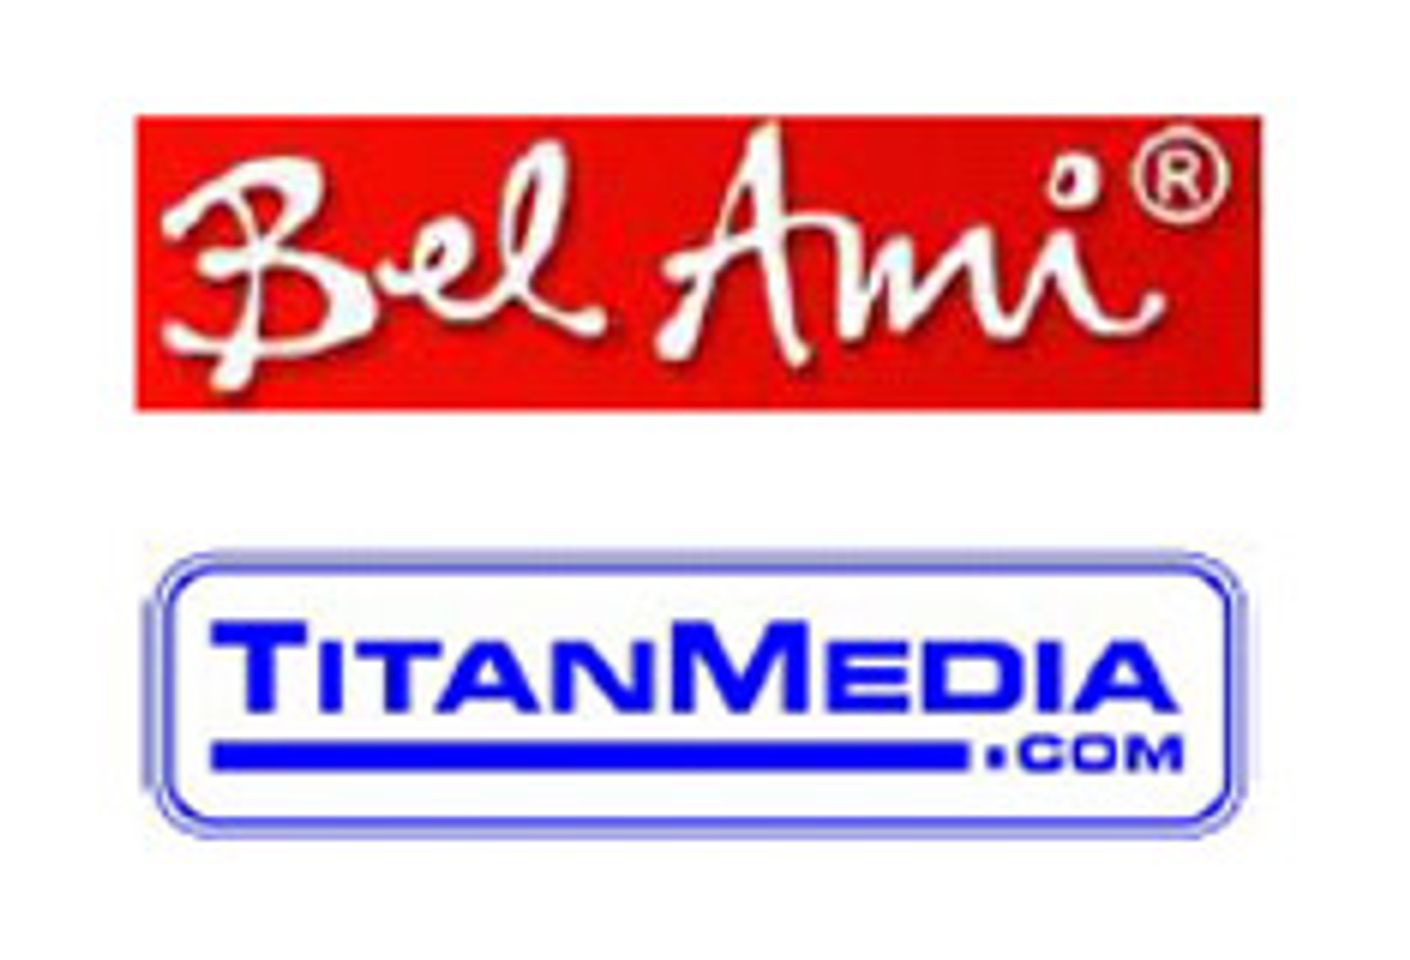 Bel Ami, Titan Media Enter into Exclusive U.S. Licensing Agreement